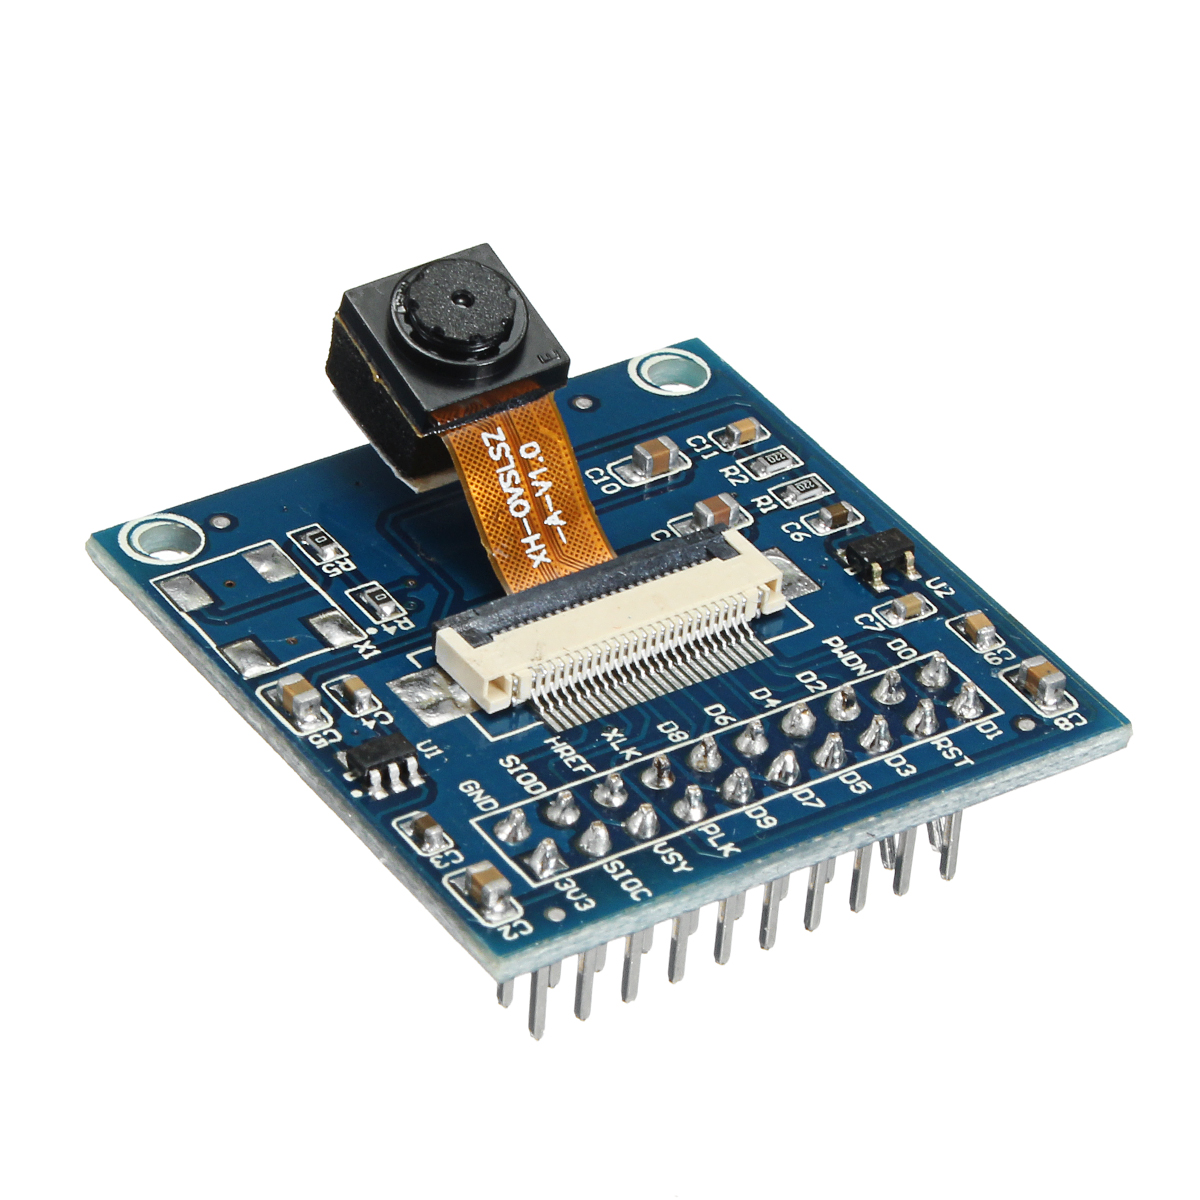 Cvmnkljfge VGA OV7670 CMOS Camera Lens Module CMOS 640x480 SCCB with I2C Interface Adapter Plate for Arduino / Starter / Kit